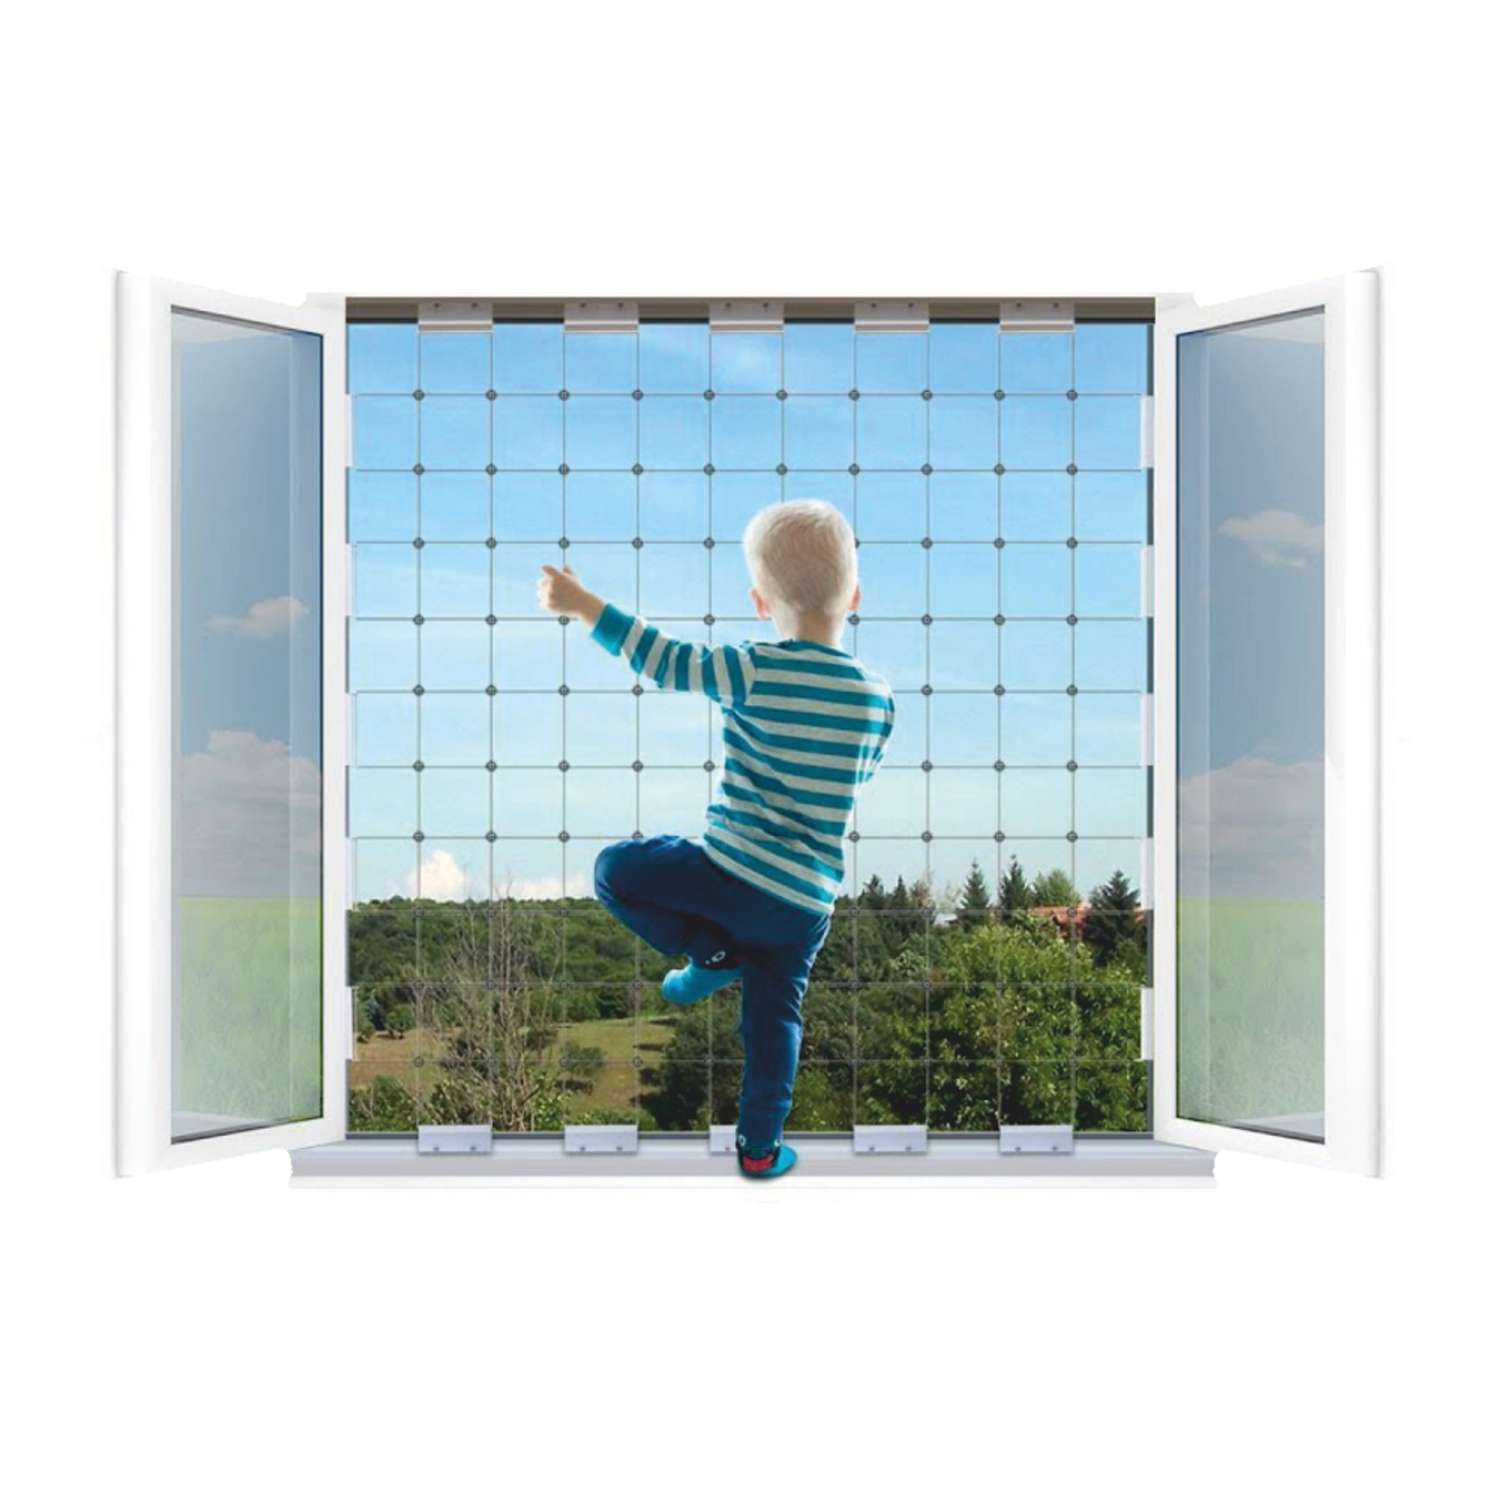 Защитная сетка WINBLOCK на окна для детей 60х140см коричневый кронштейн - фото 2